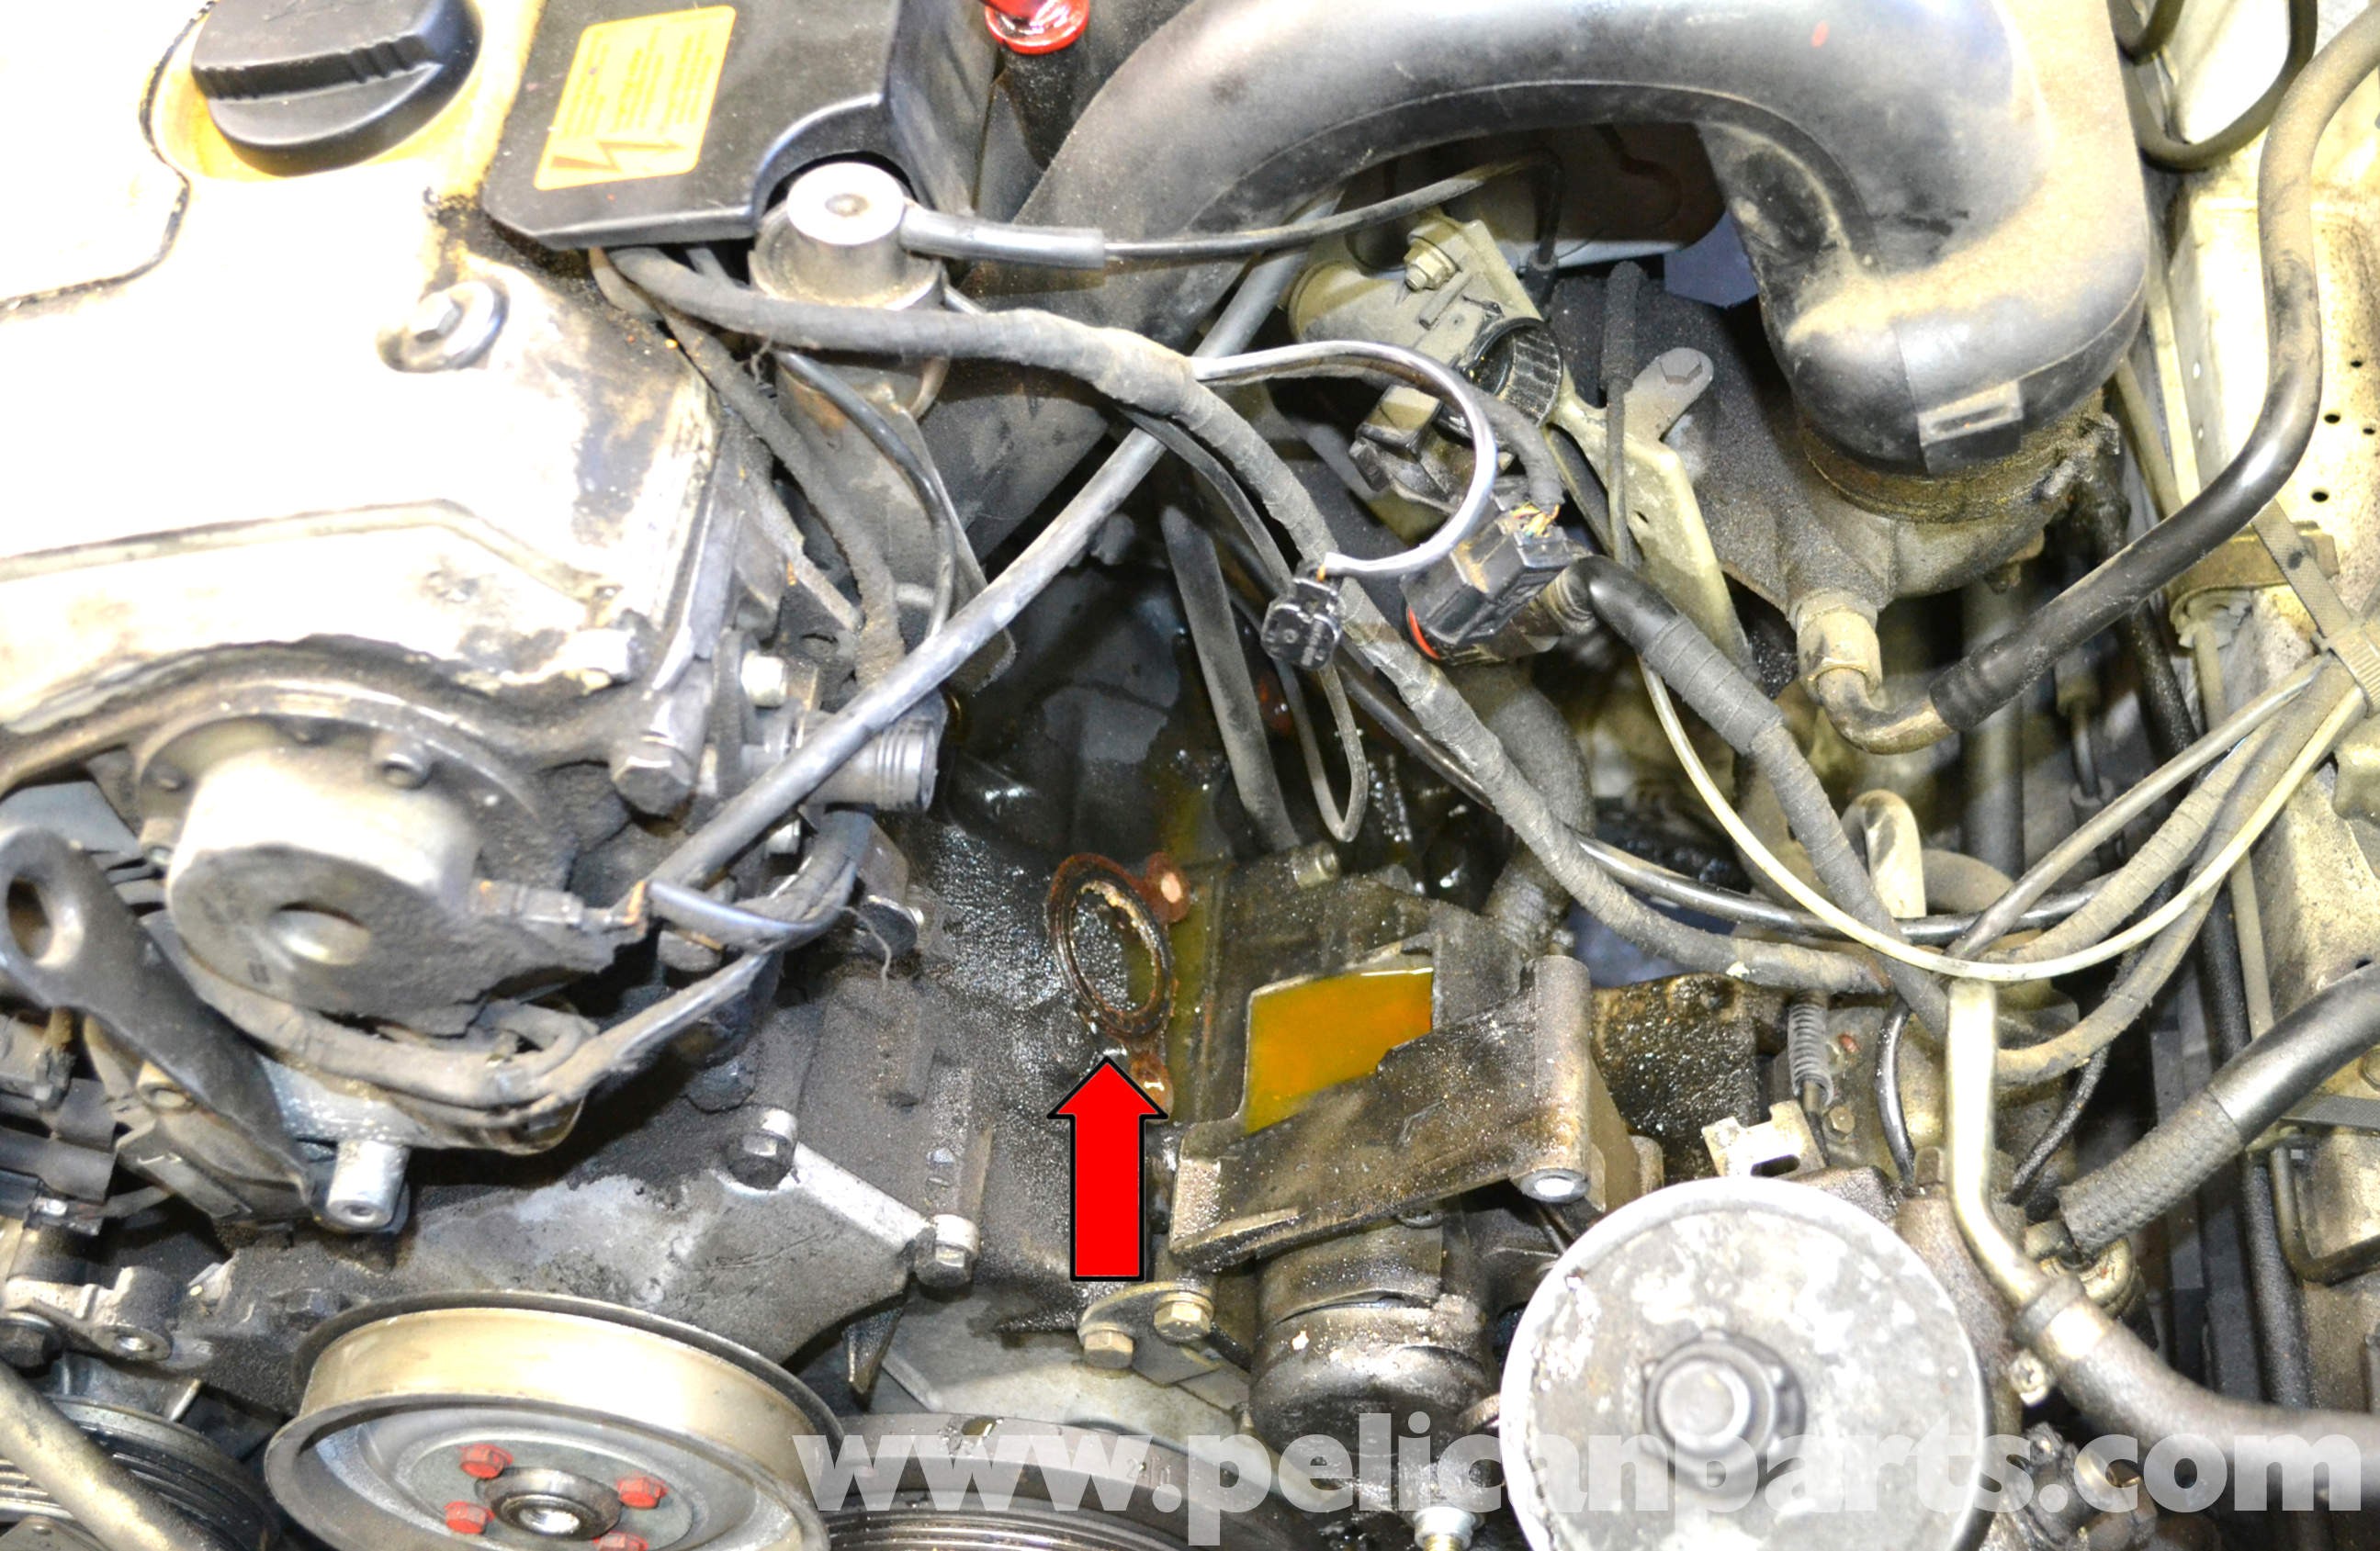 Mercedes M103 Engine Diagram | My Wiring DIagram